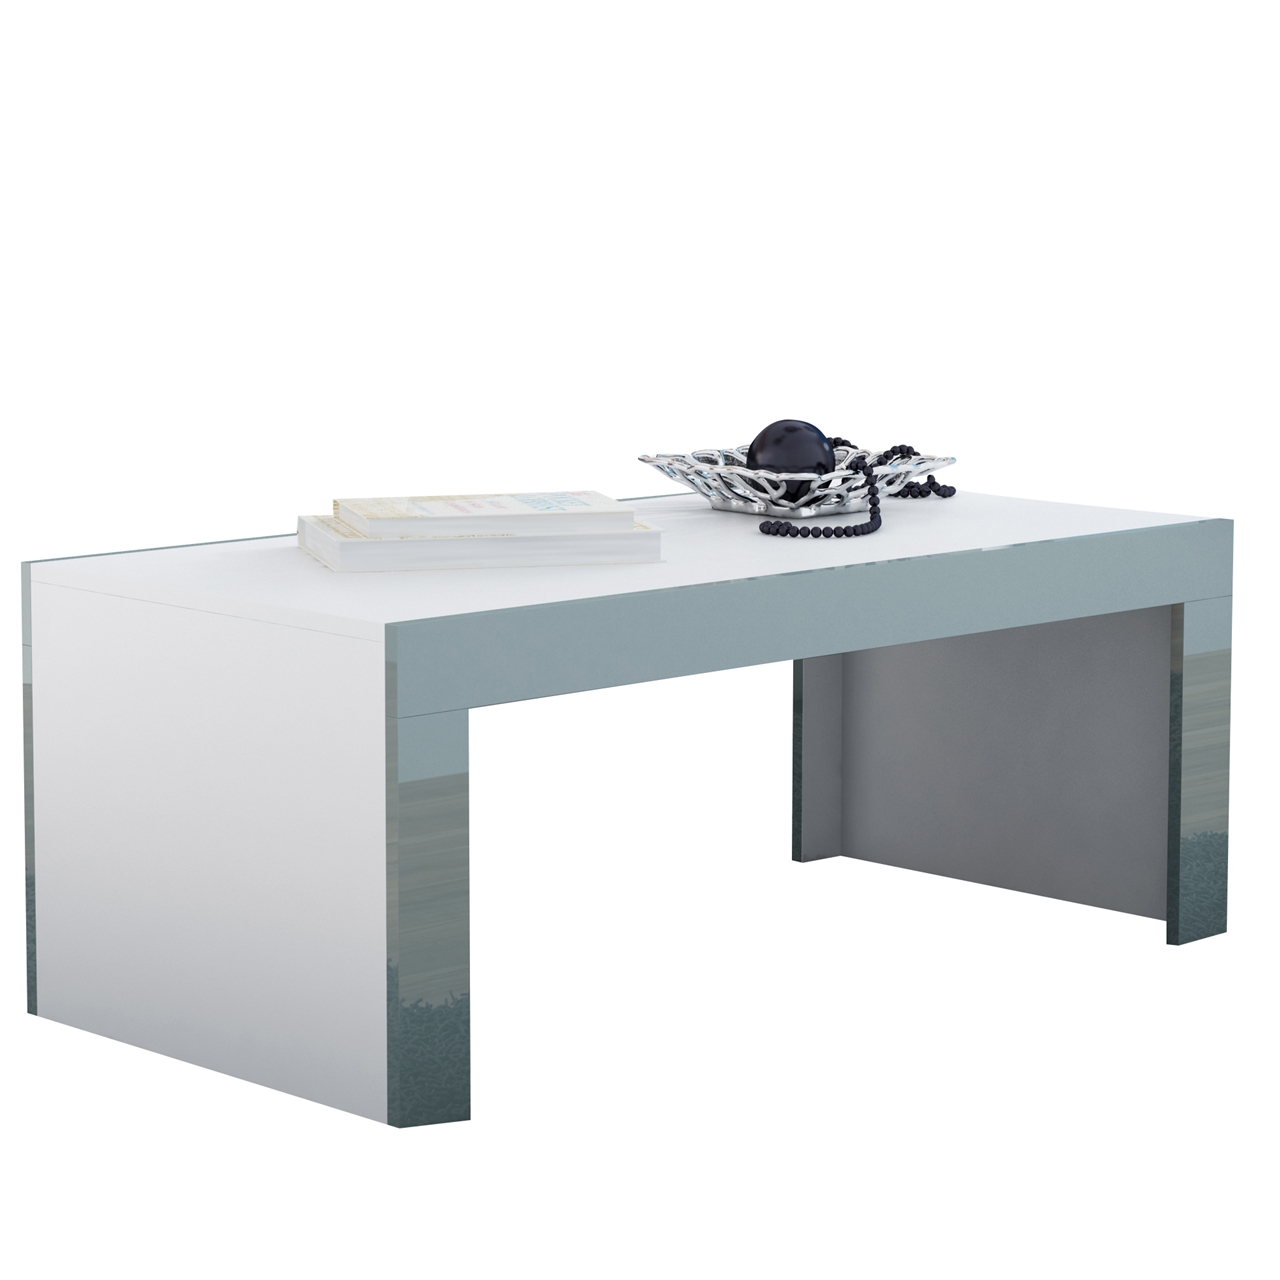 Coffee table TESS 120 white / grey gloss